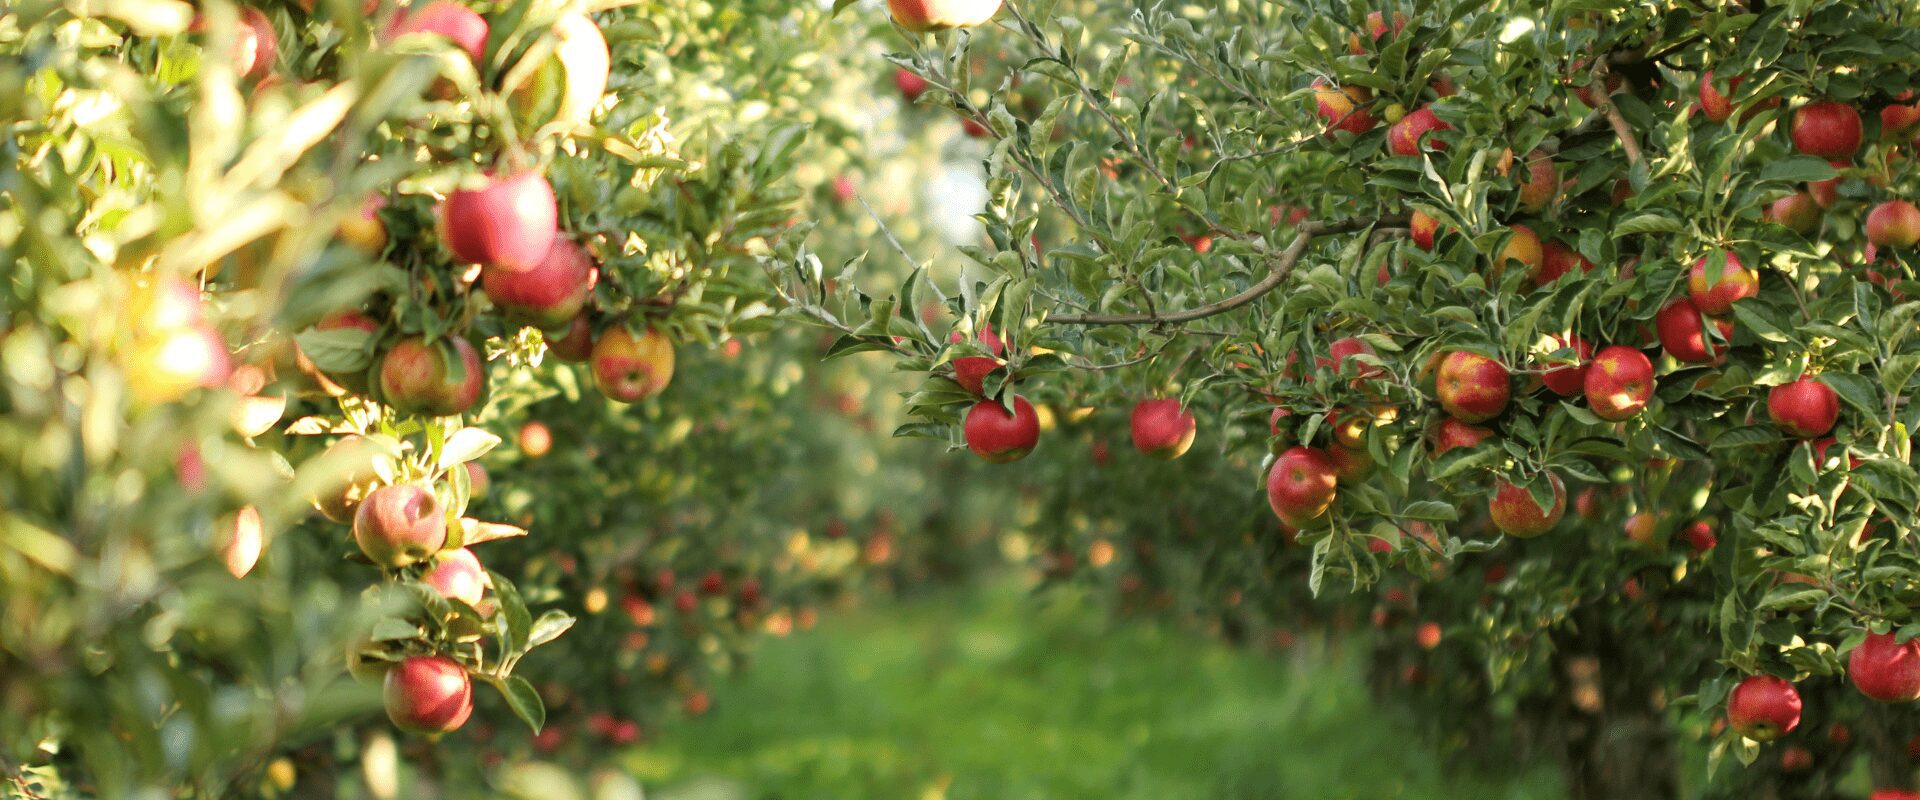 Demarest Farms Apple Picking